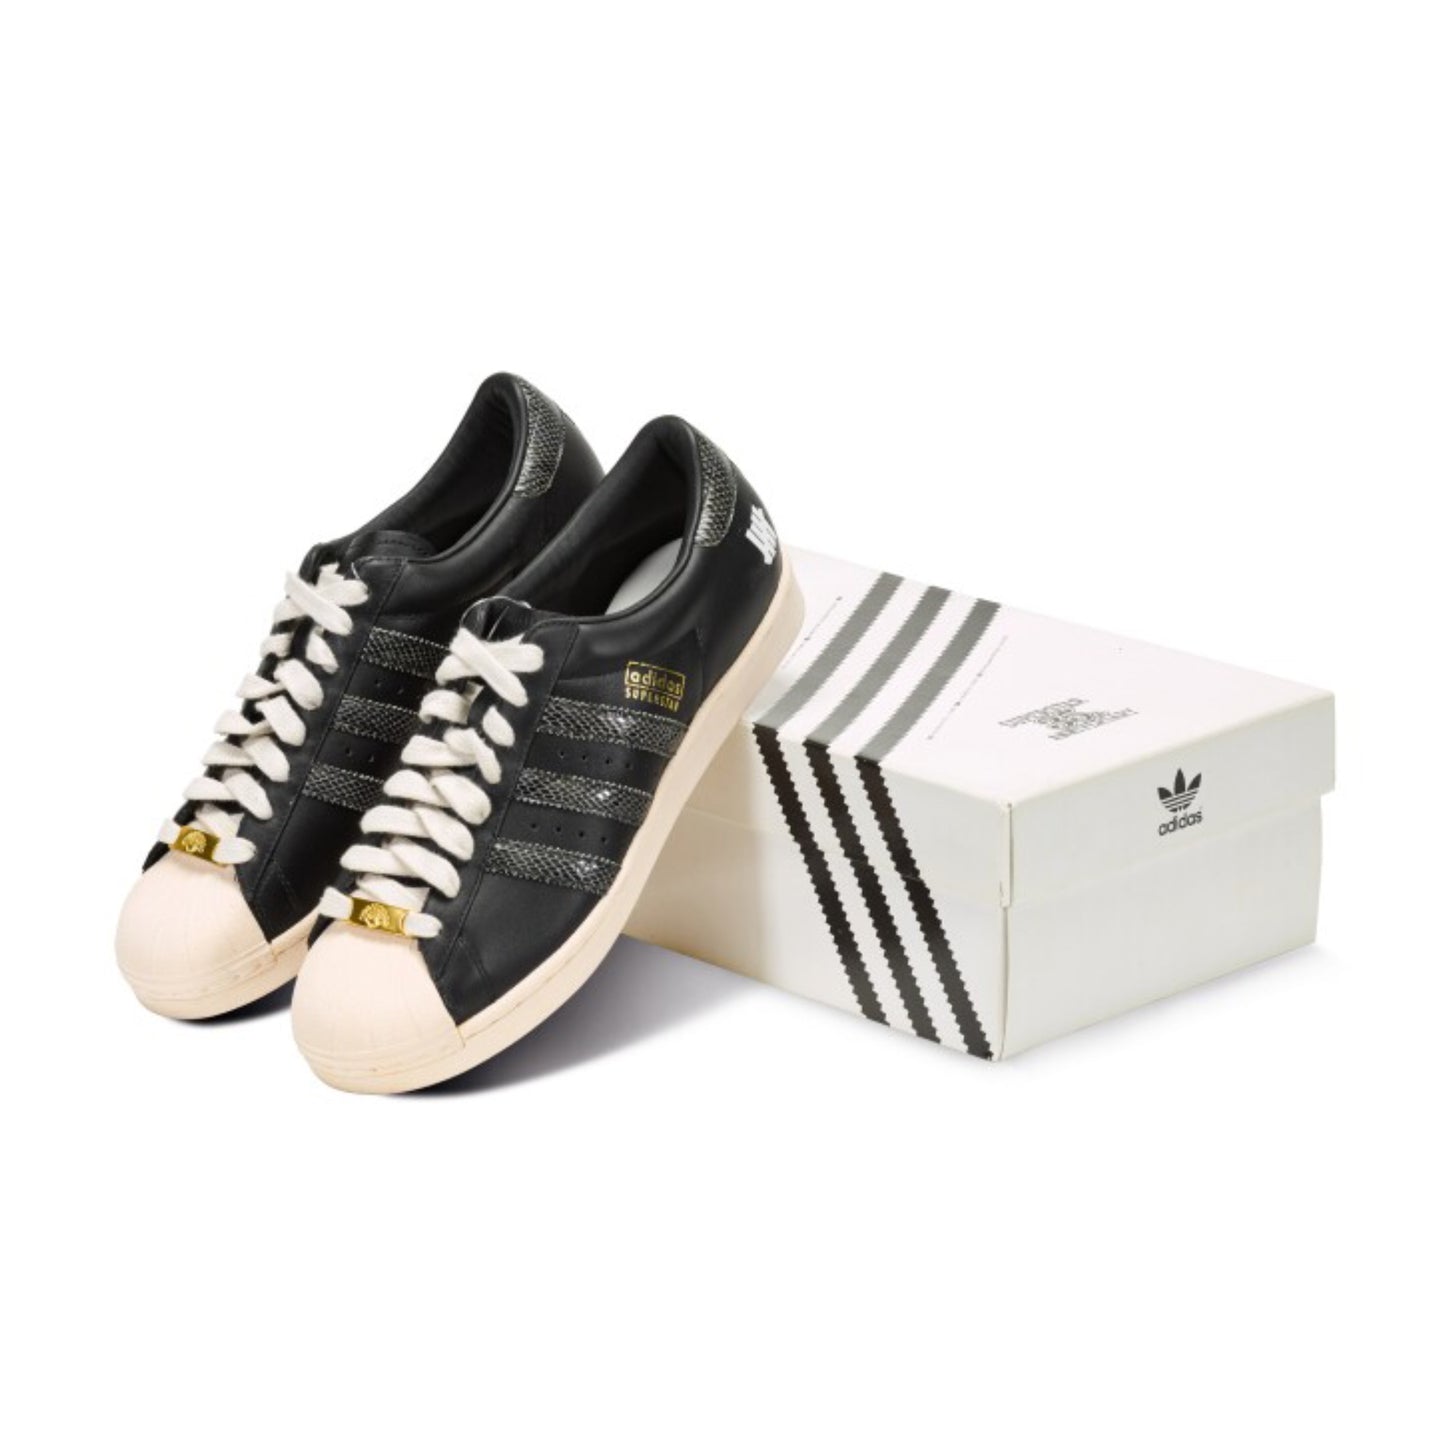 Adidas Original 35th Anniversary Consortium Superstar X Undefeated Black Black White